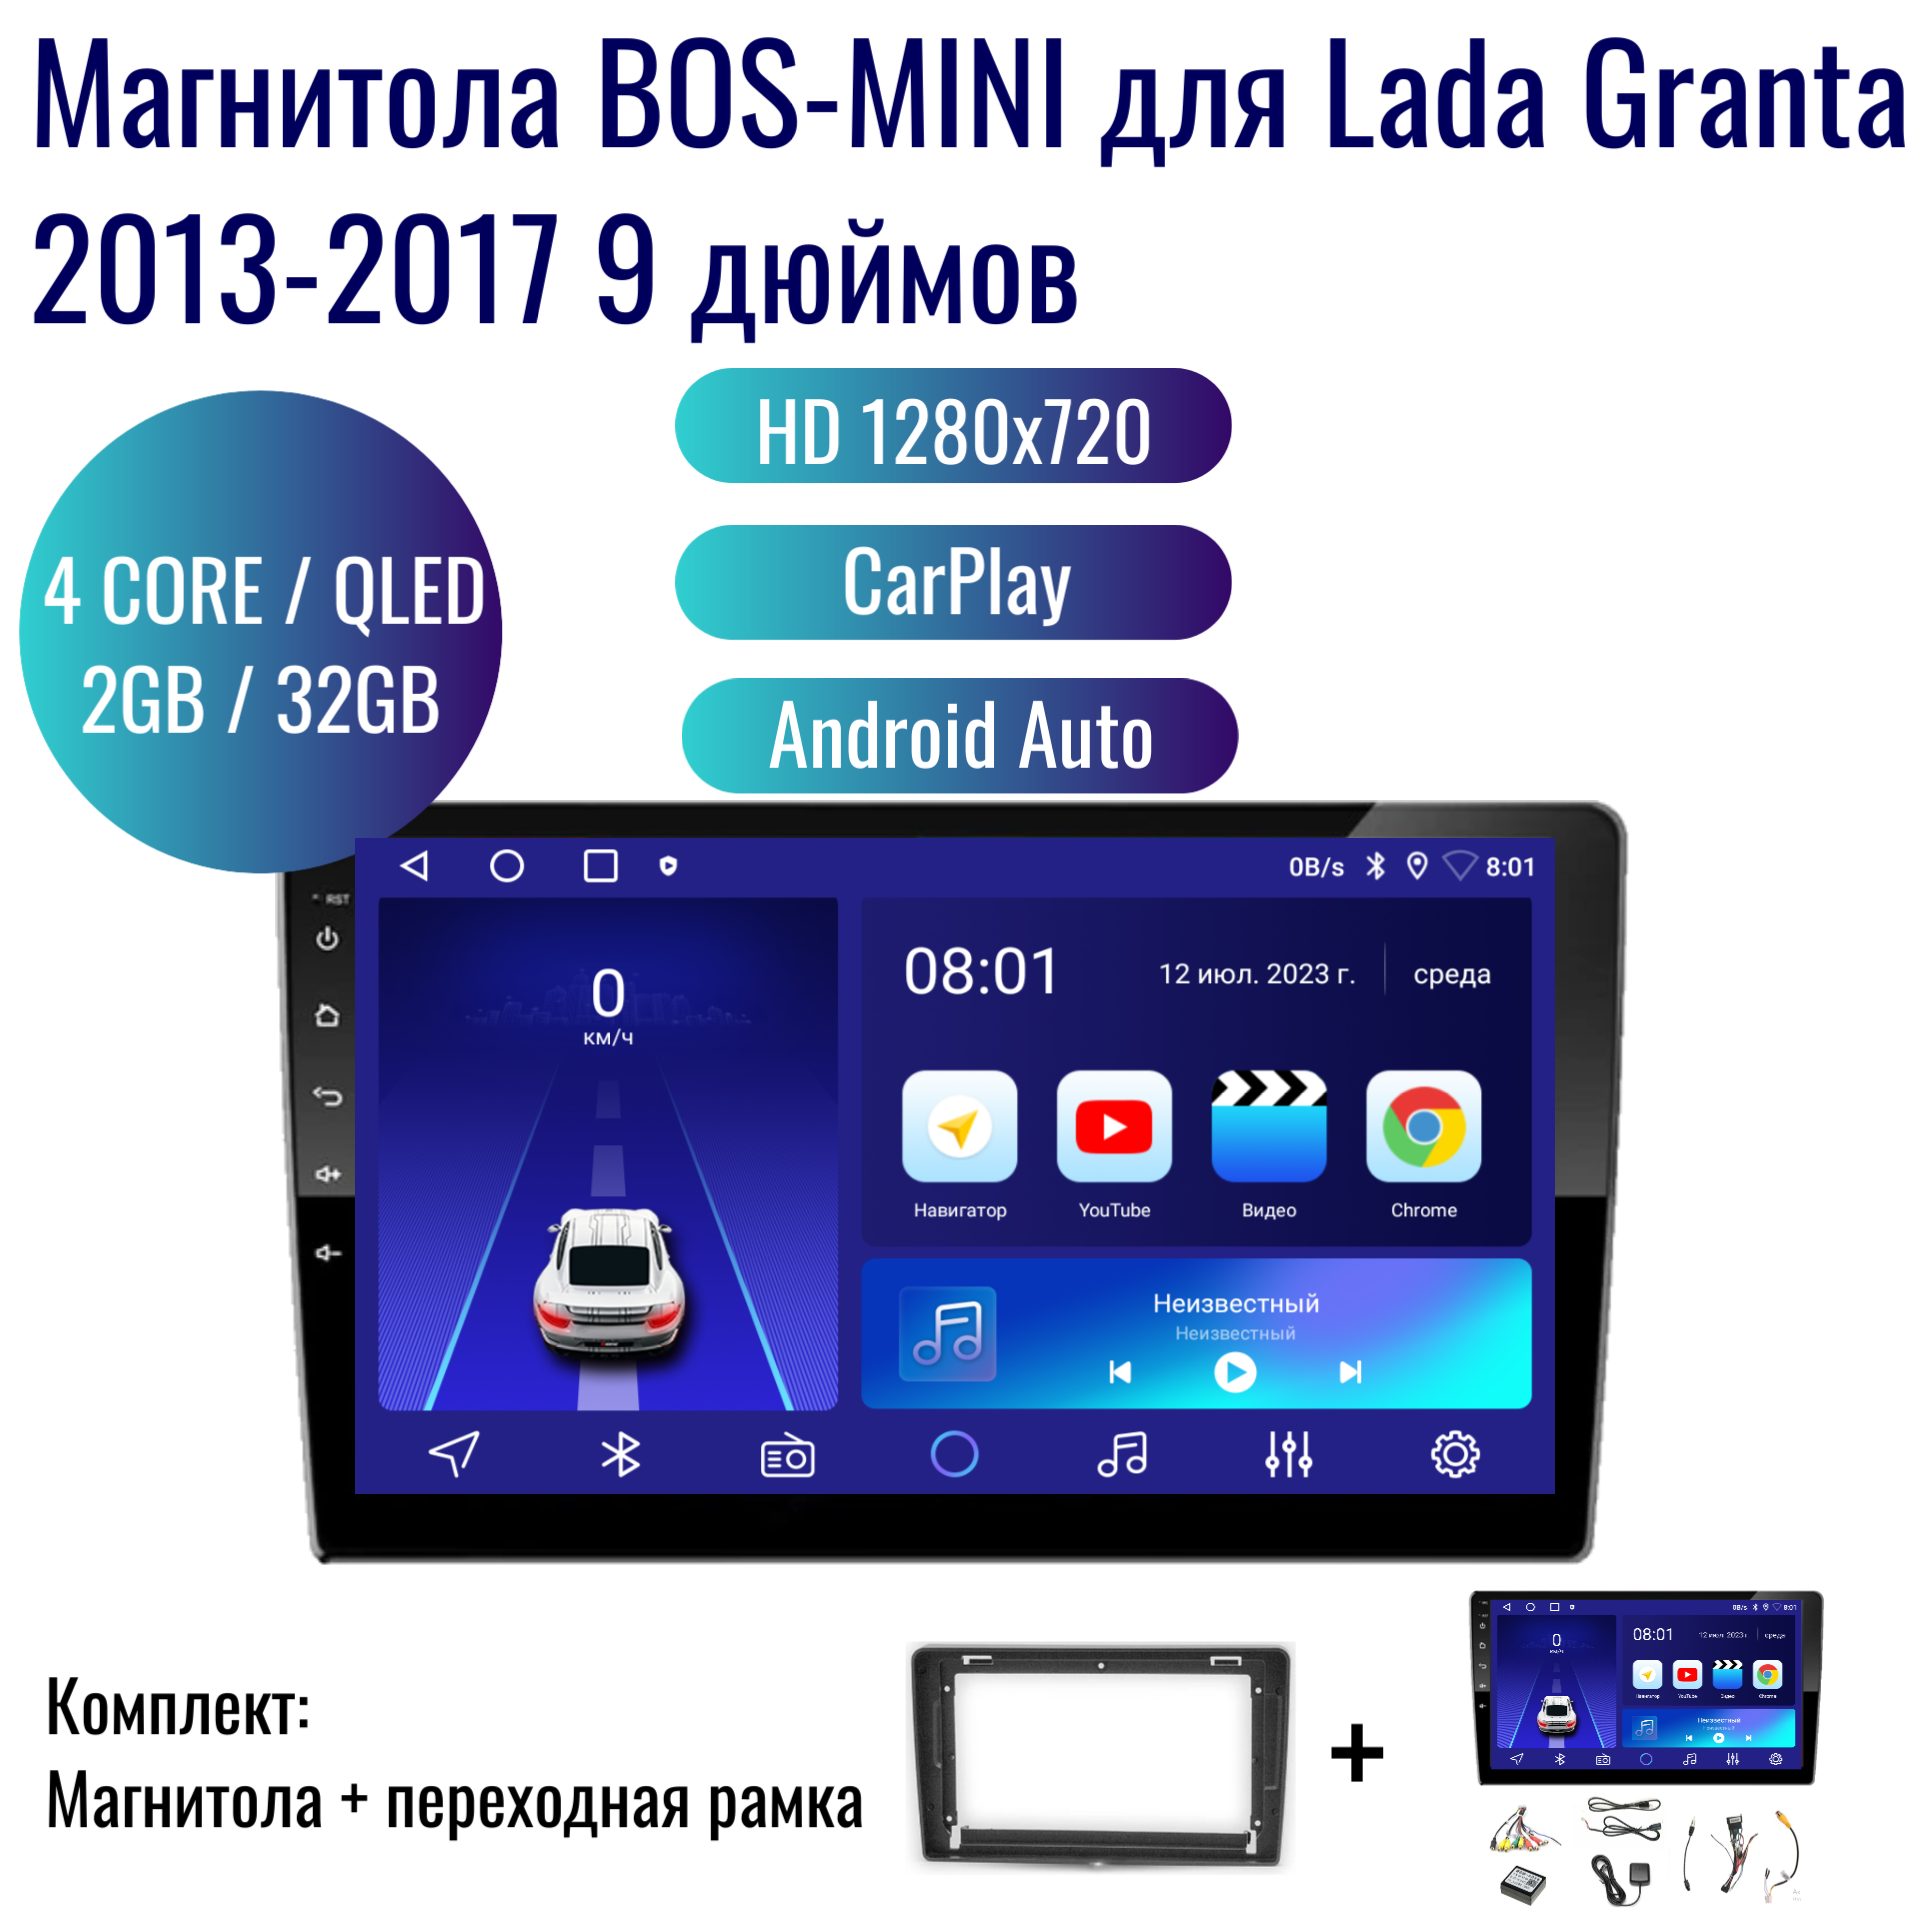 Автомагнитола BOS-MINI Android Lada Granta 2013-2017 / 4 ядер 2Gb+32Gb / 9 дюймов / GPS / Bluetooth / Wi-Fi / 2din / навигатор / CarPlay